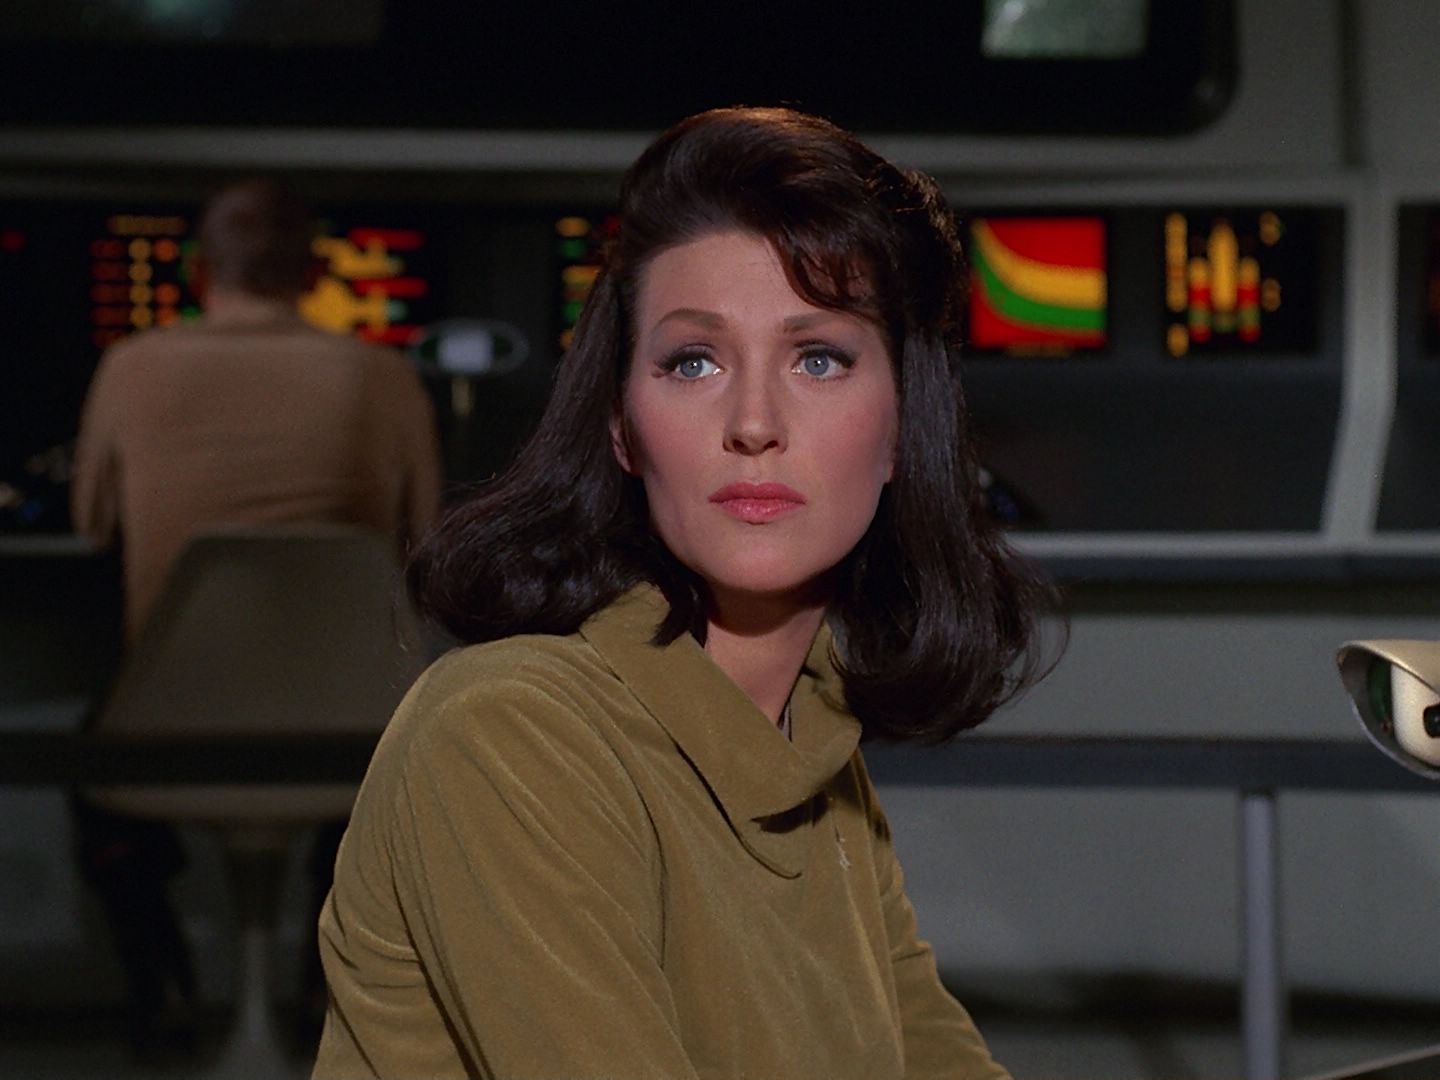 The Cage Pilot Episode Star Trek The Original Series Screencaps